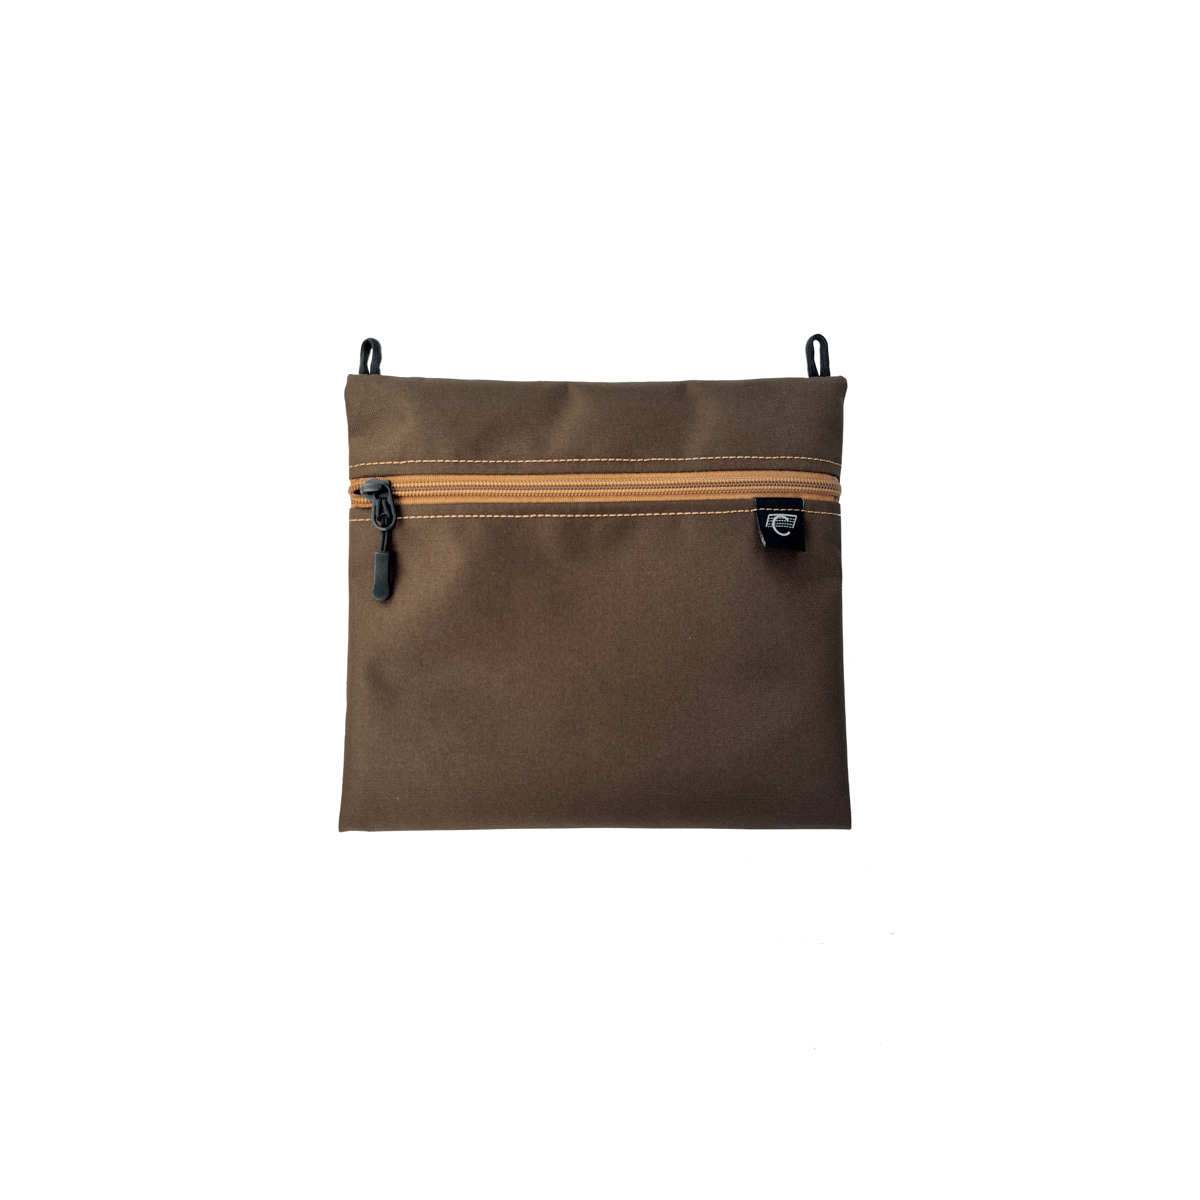 Image of Brown and tan kit bag